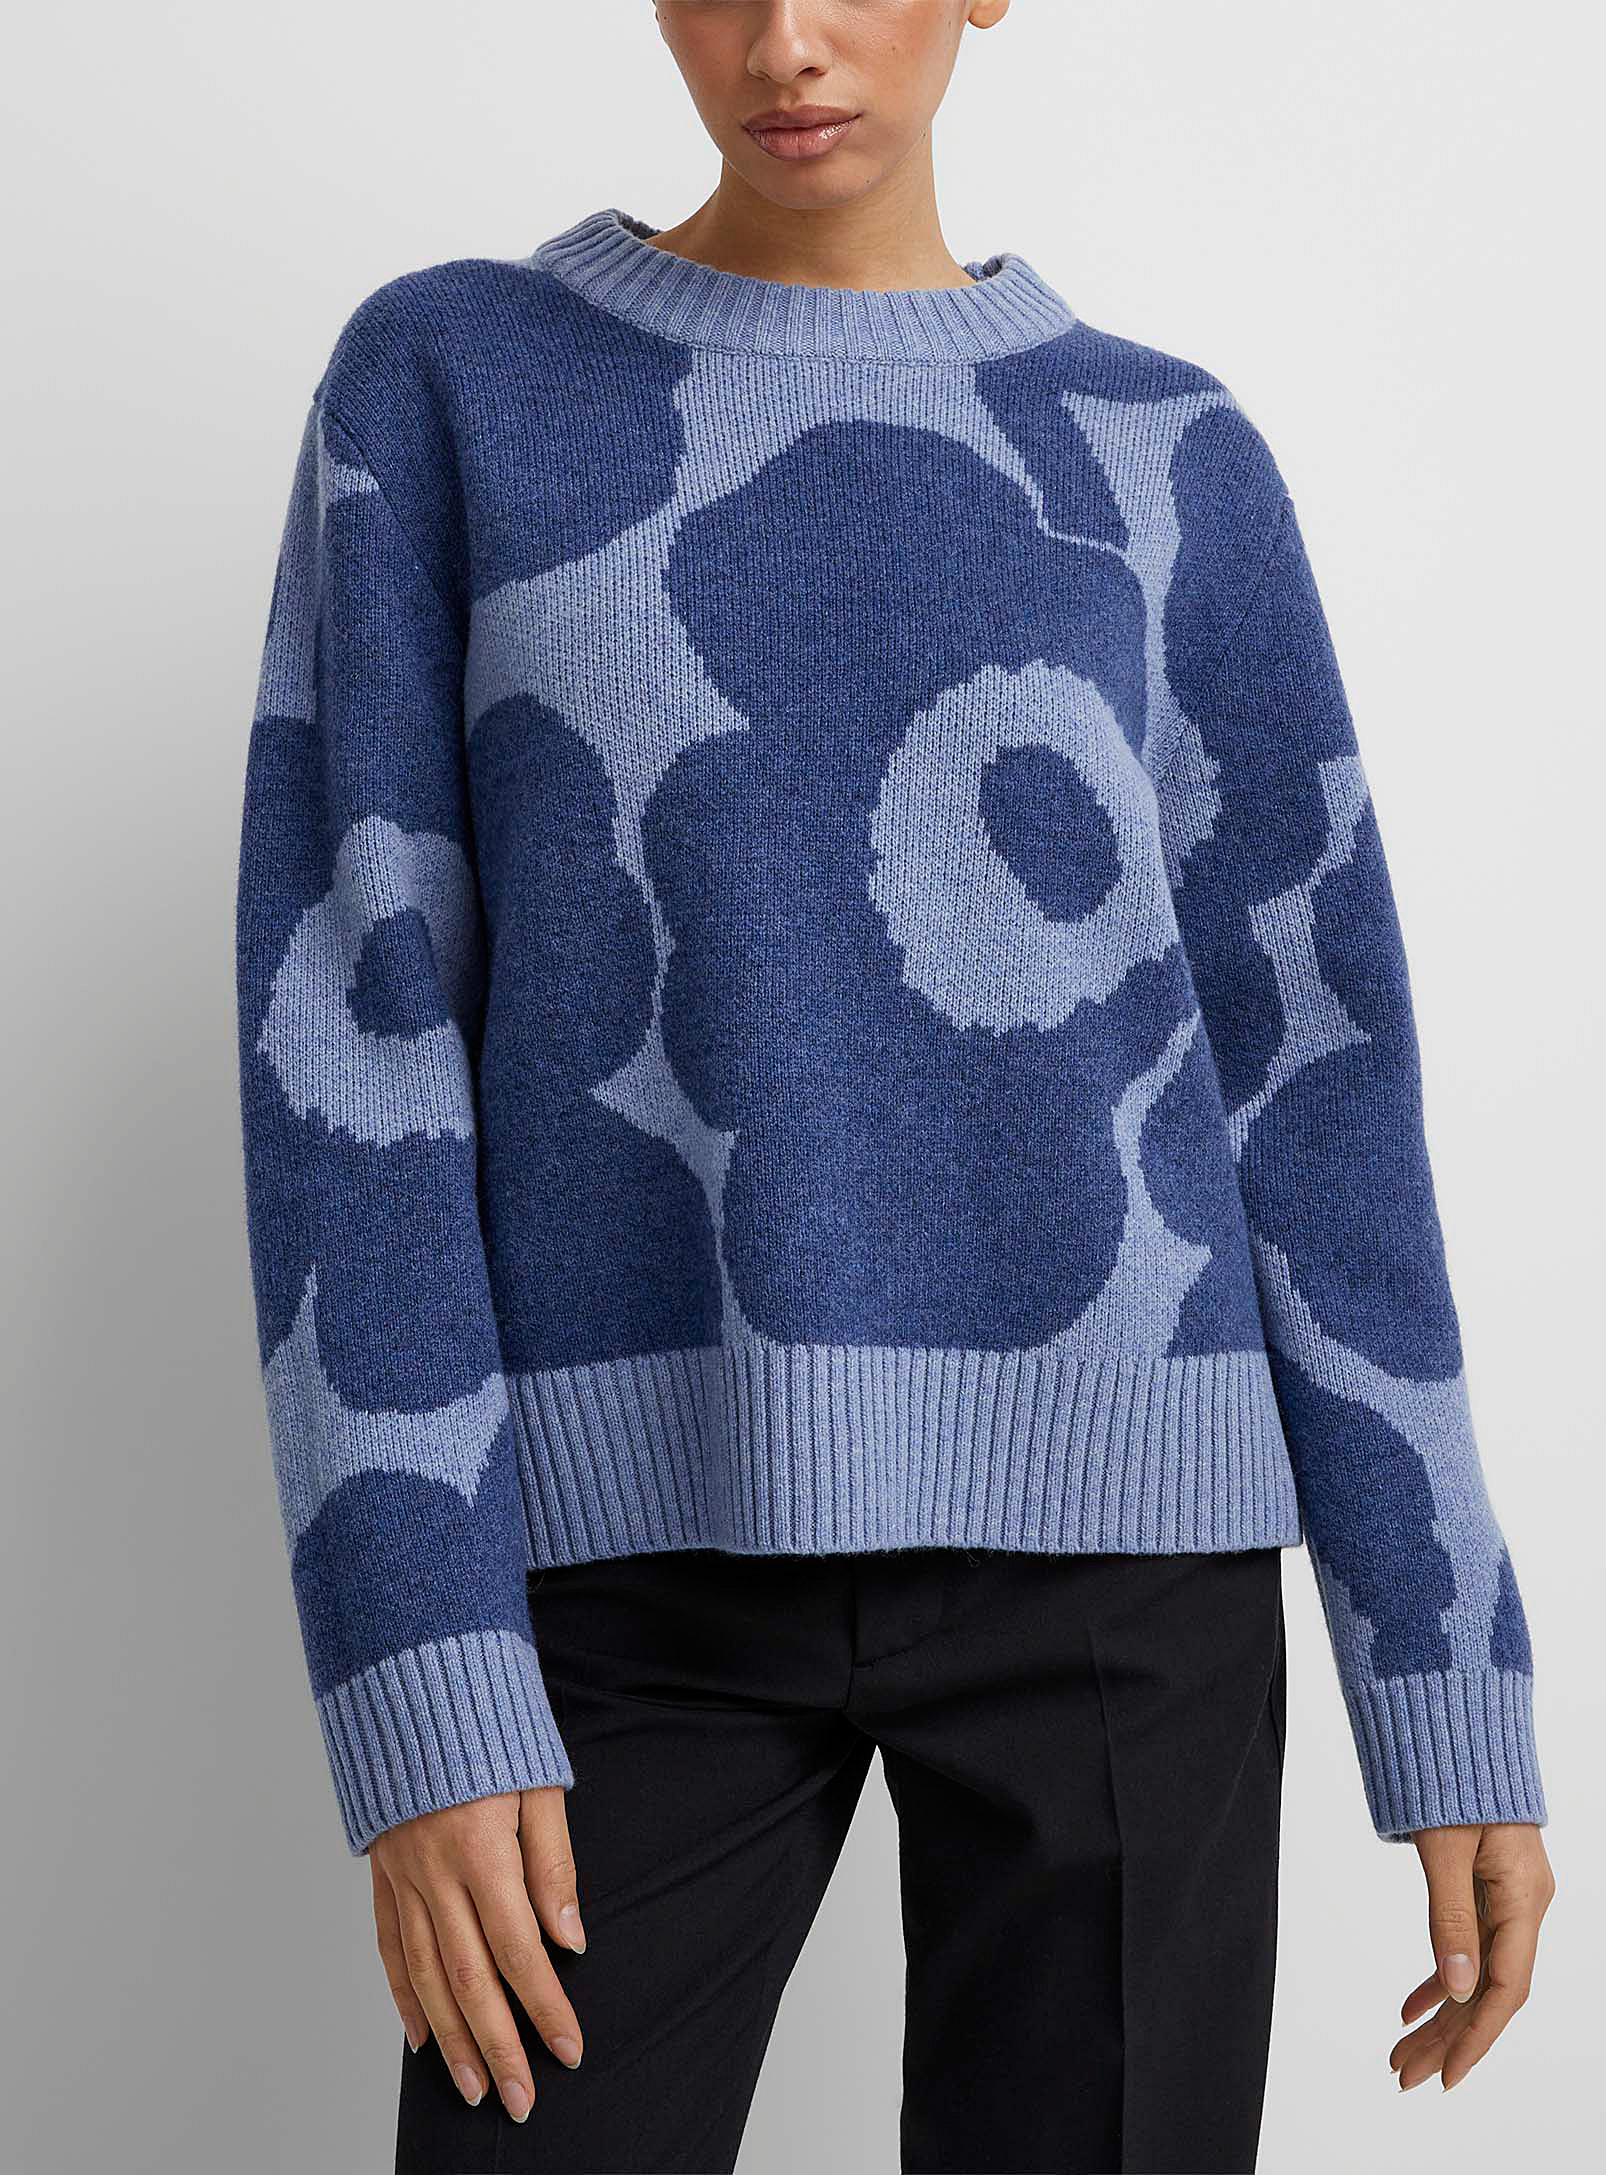 Marimekko - Women's Arkki Heijastus sweater